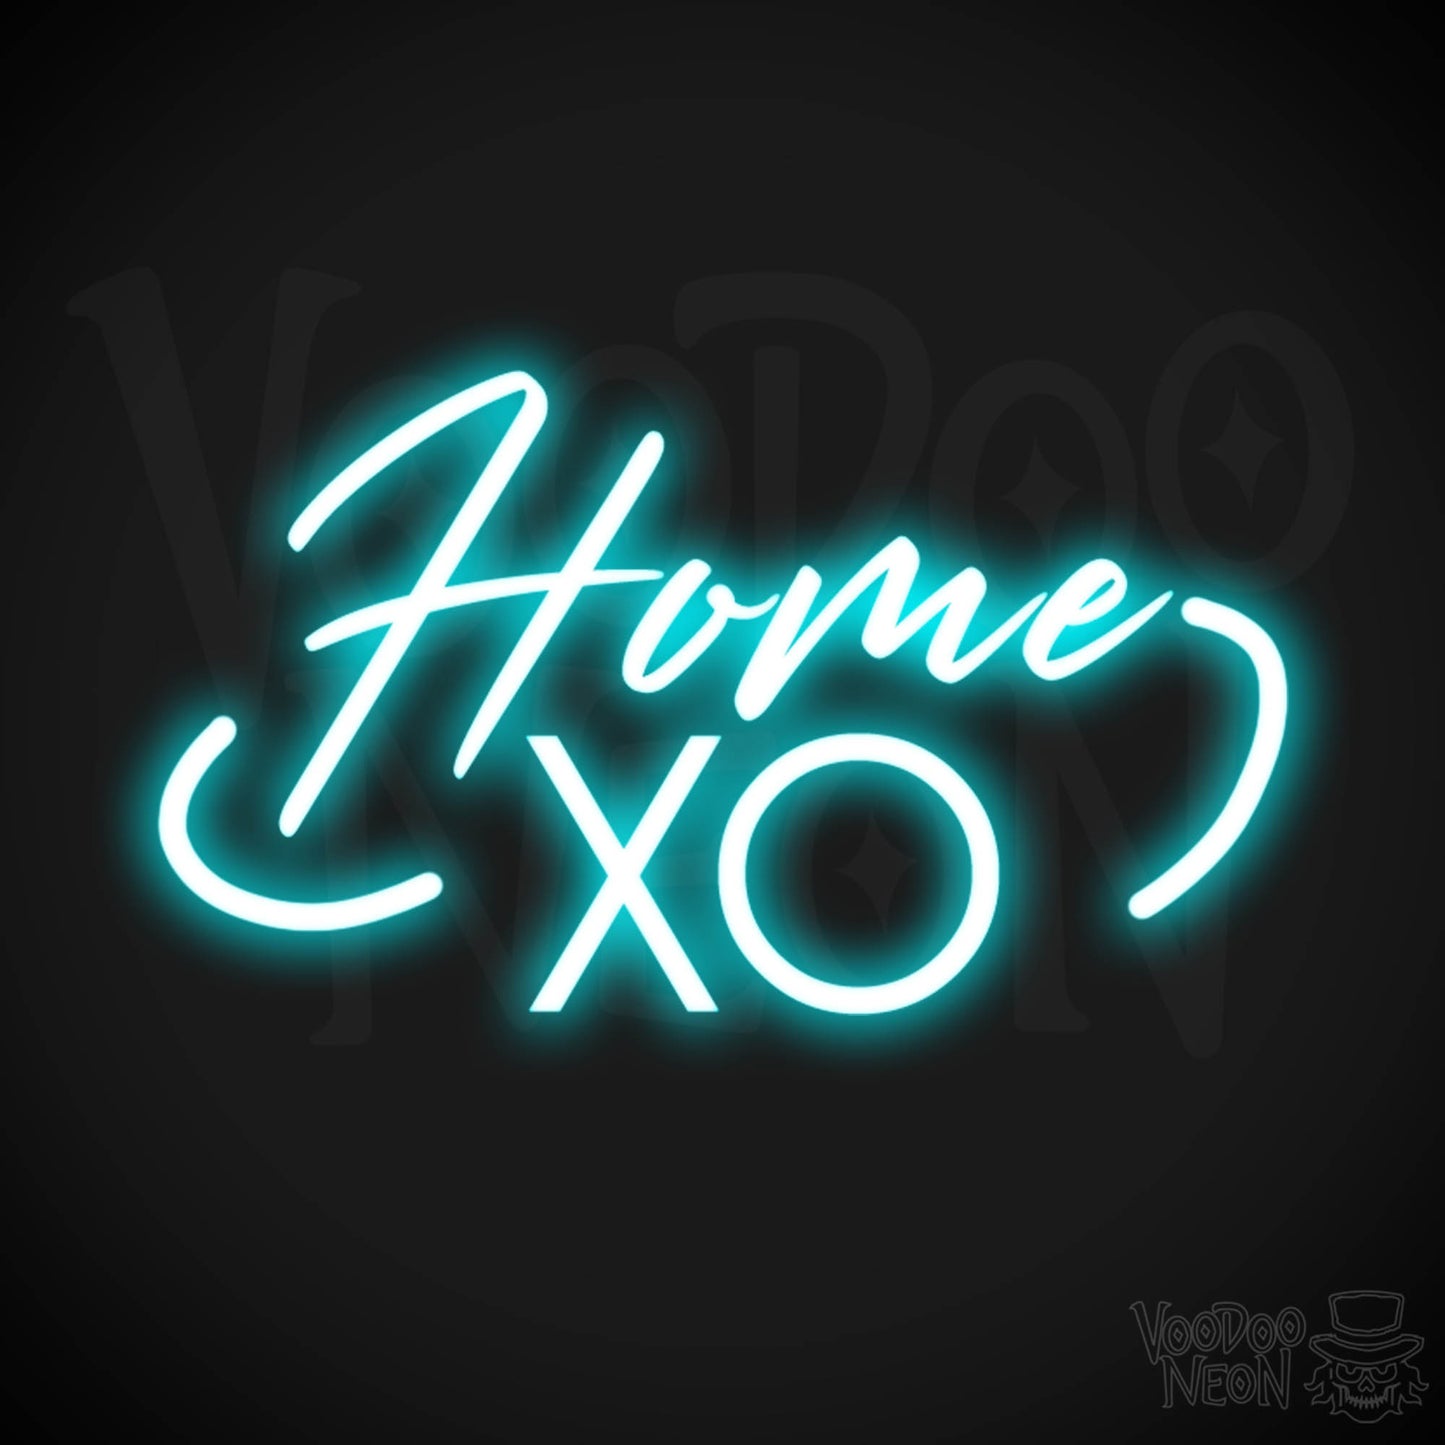 Home XO Neon Sign - Neon Home XO Sign - Wall Art - Color Ice Blue